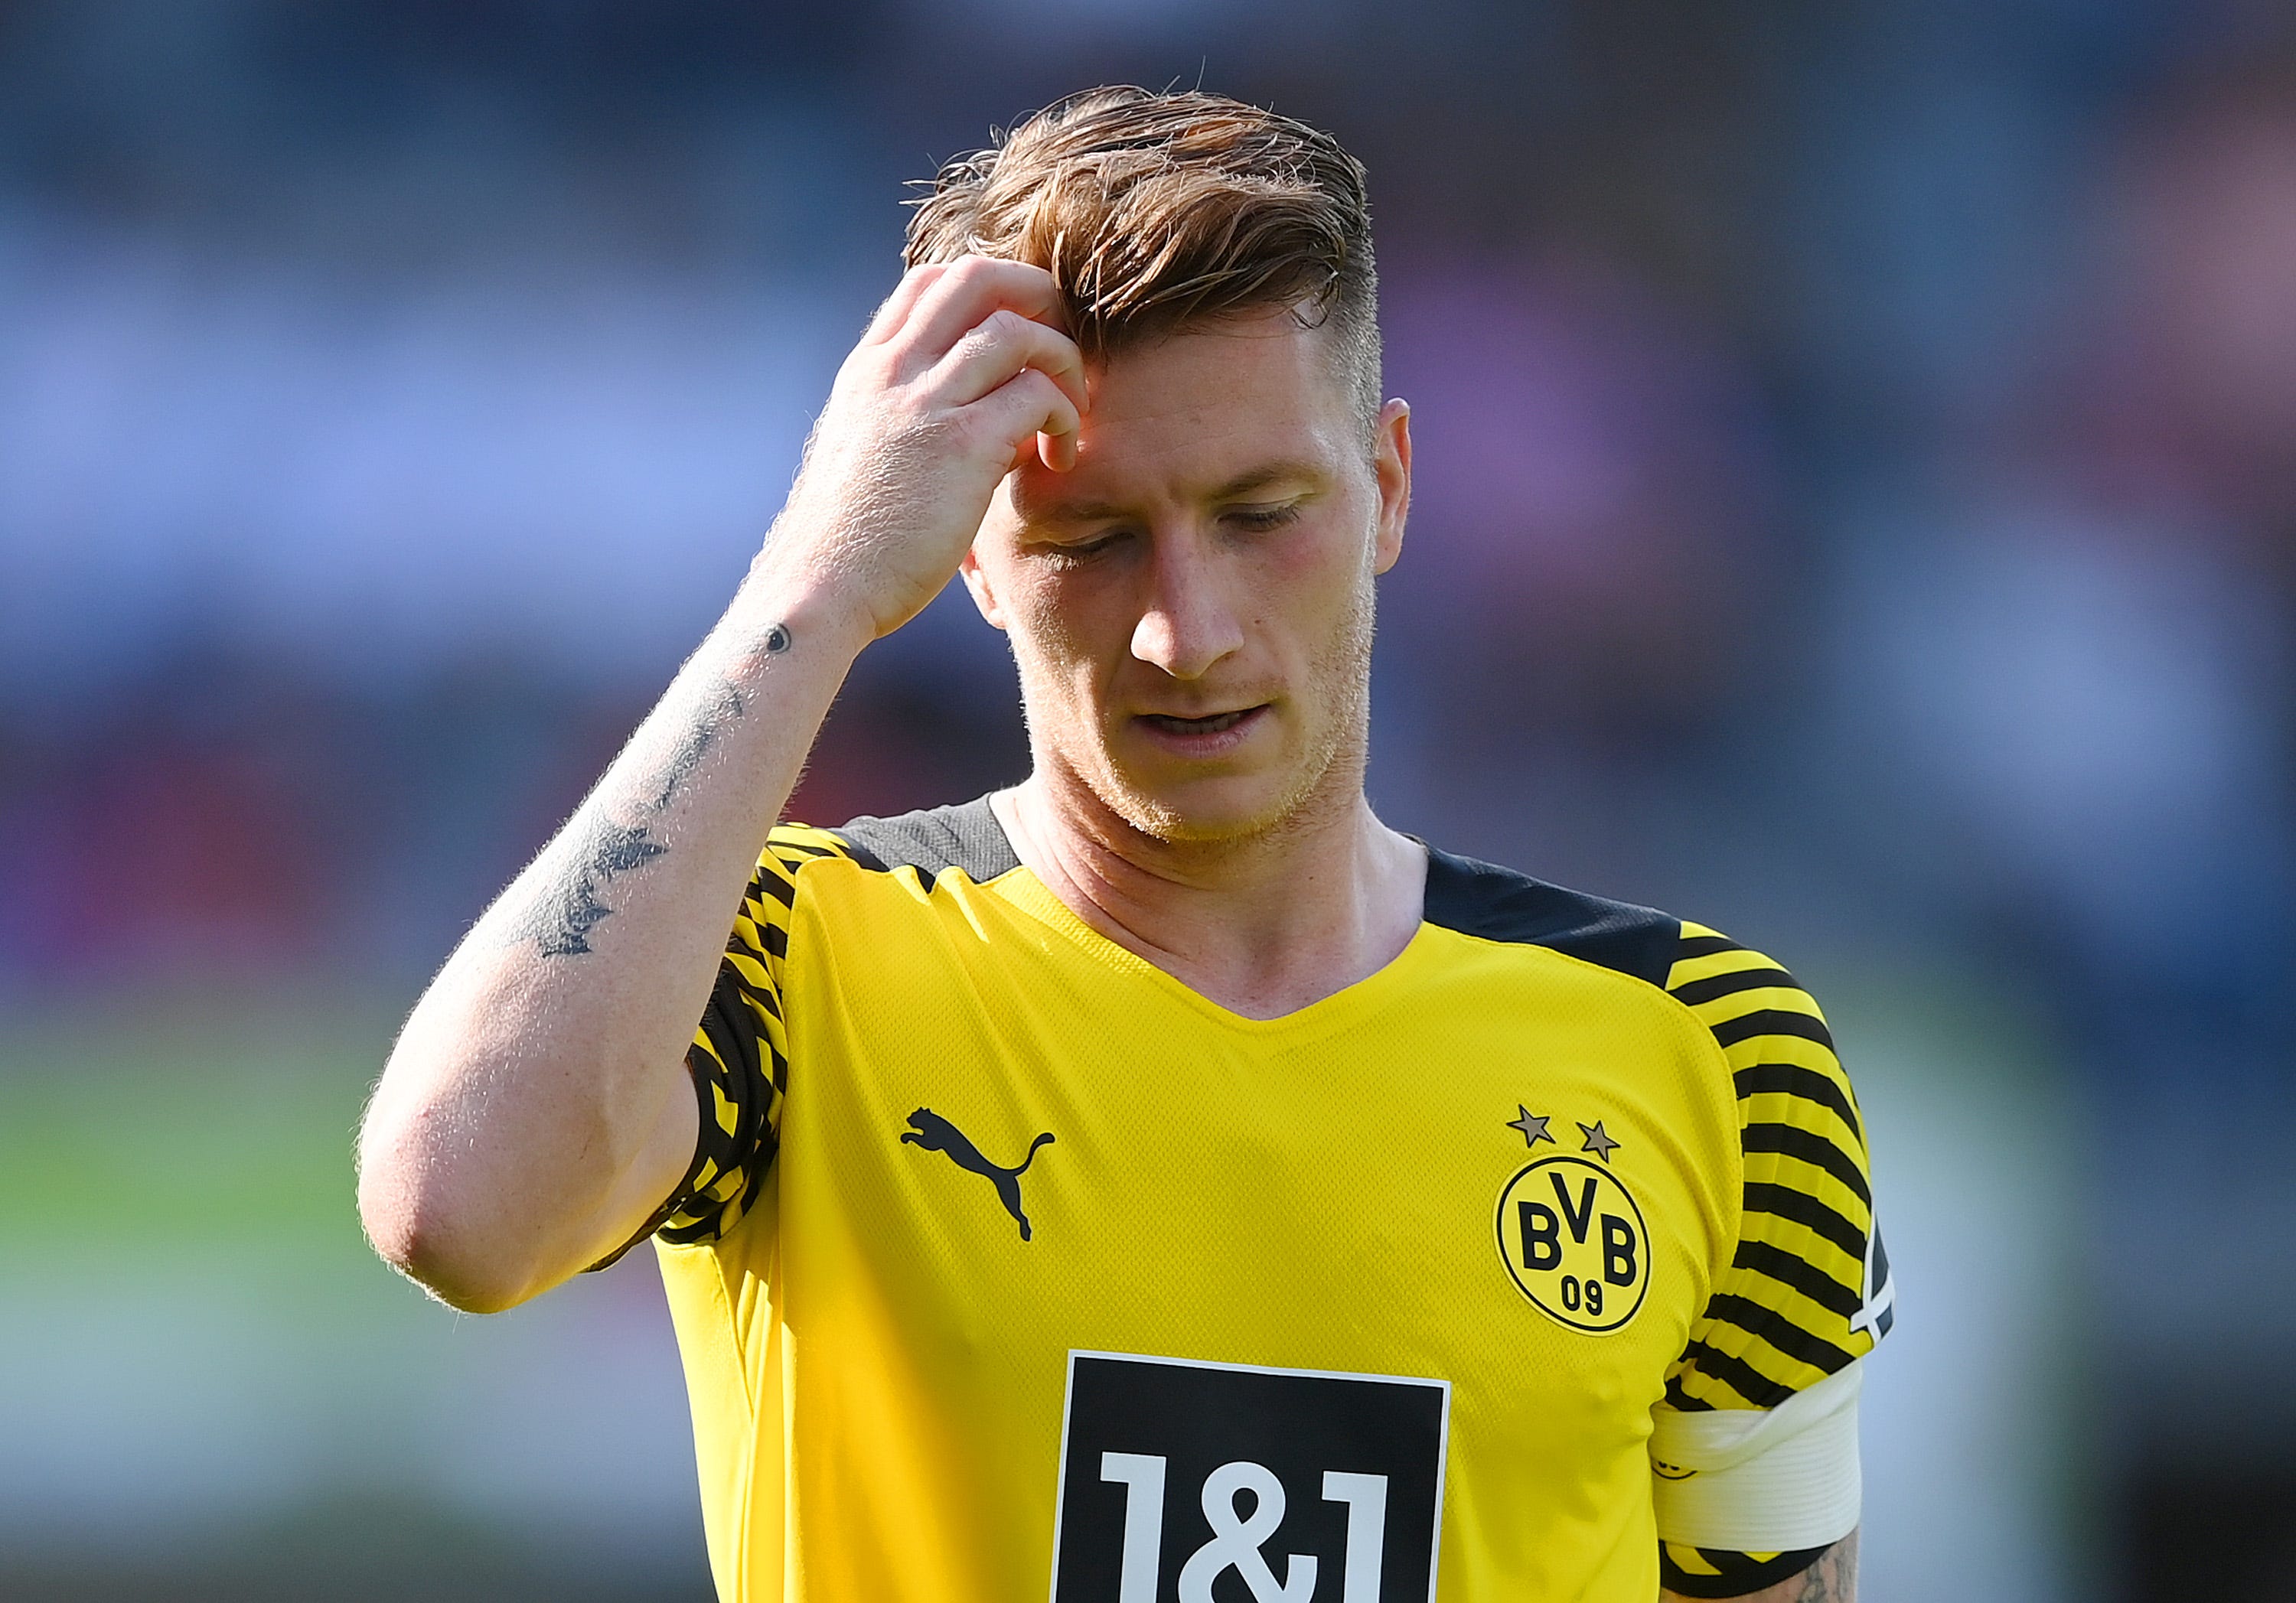 Darum zeigt Sky BVB (Borussia Dortmund) vs